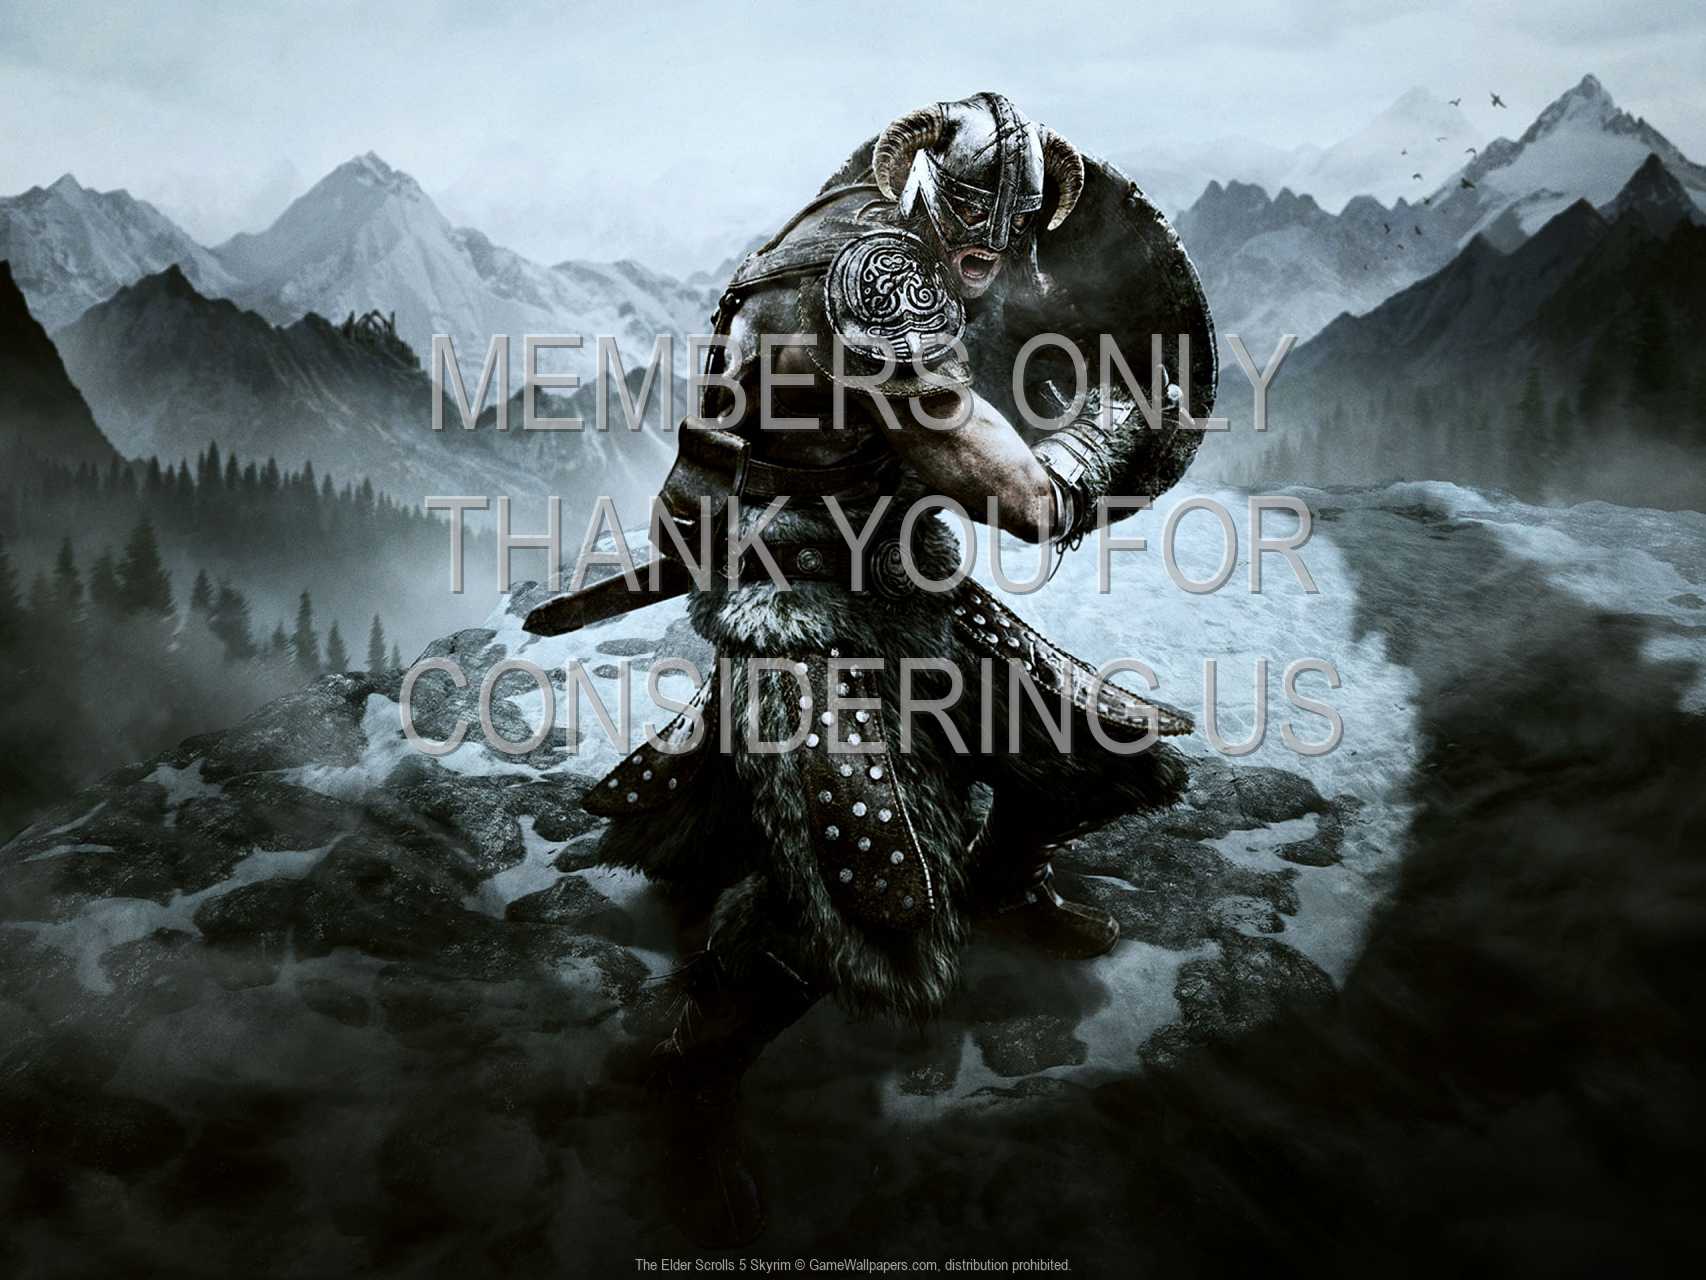 The Elder Scrolls 5: Skyrim 720p Horizontal Mobile wallpaper or background 03